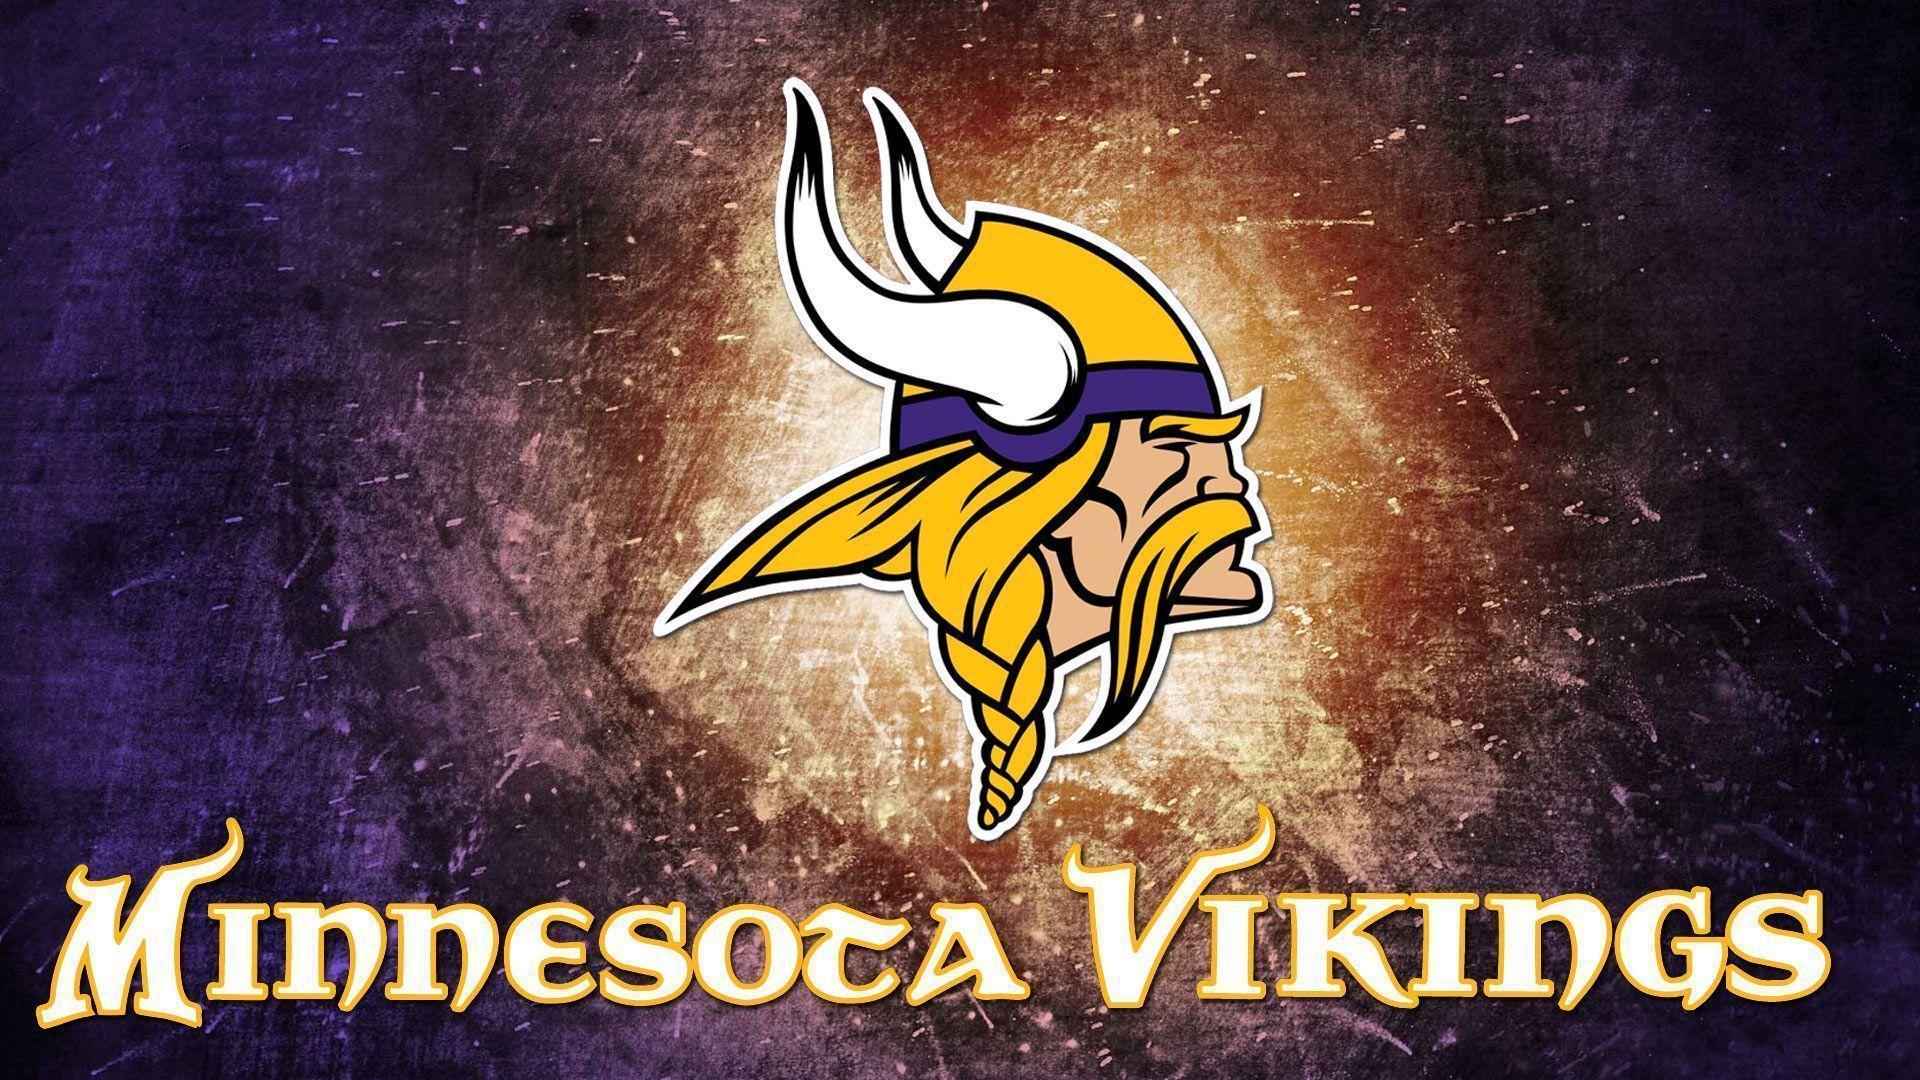 Download Minnesota Vikings logo HD 1080p Wallpapers size 1920X1080